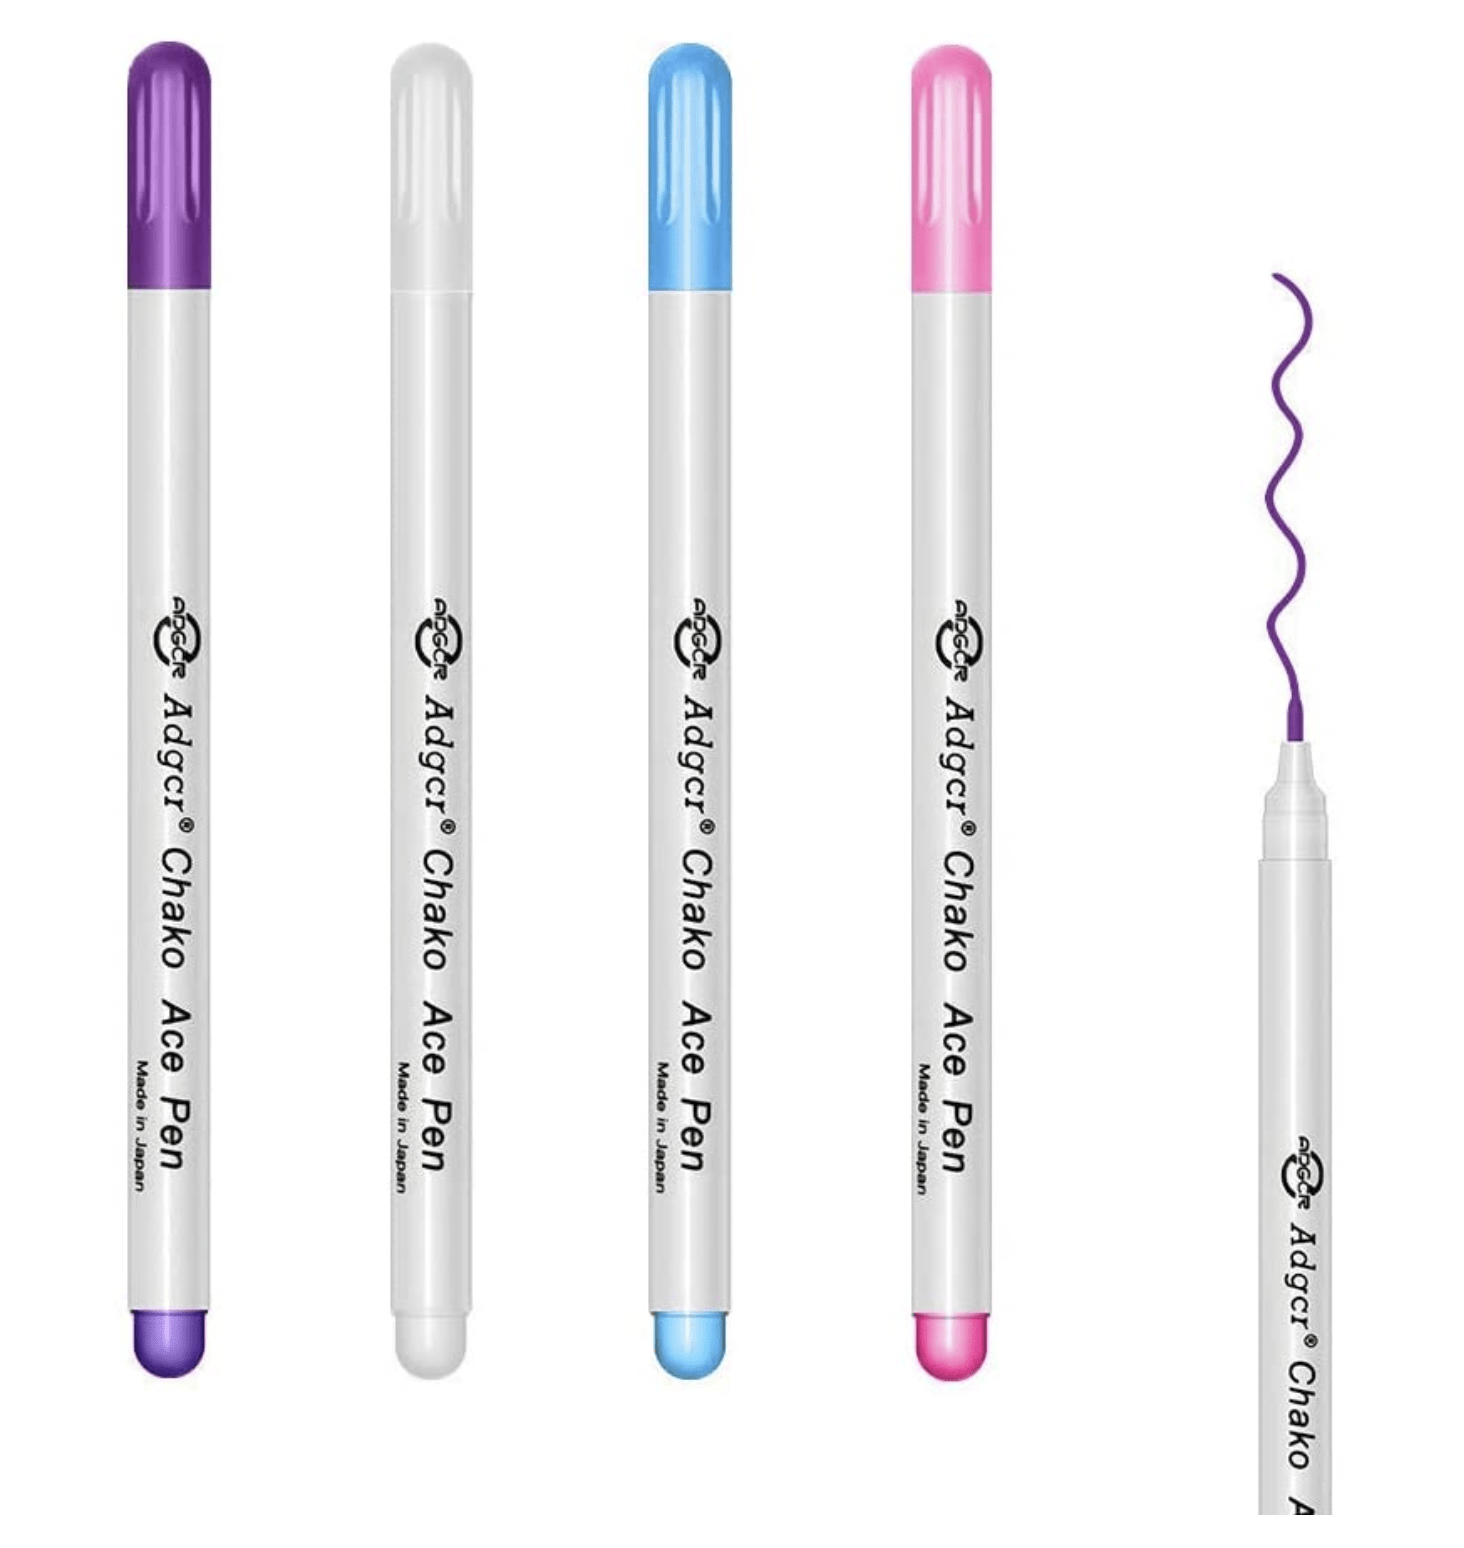 Heat Erasable Fabric Marking Pen Refills – MadamSew